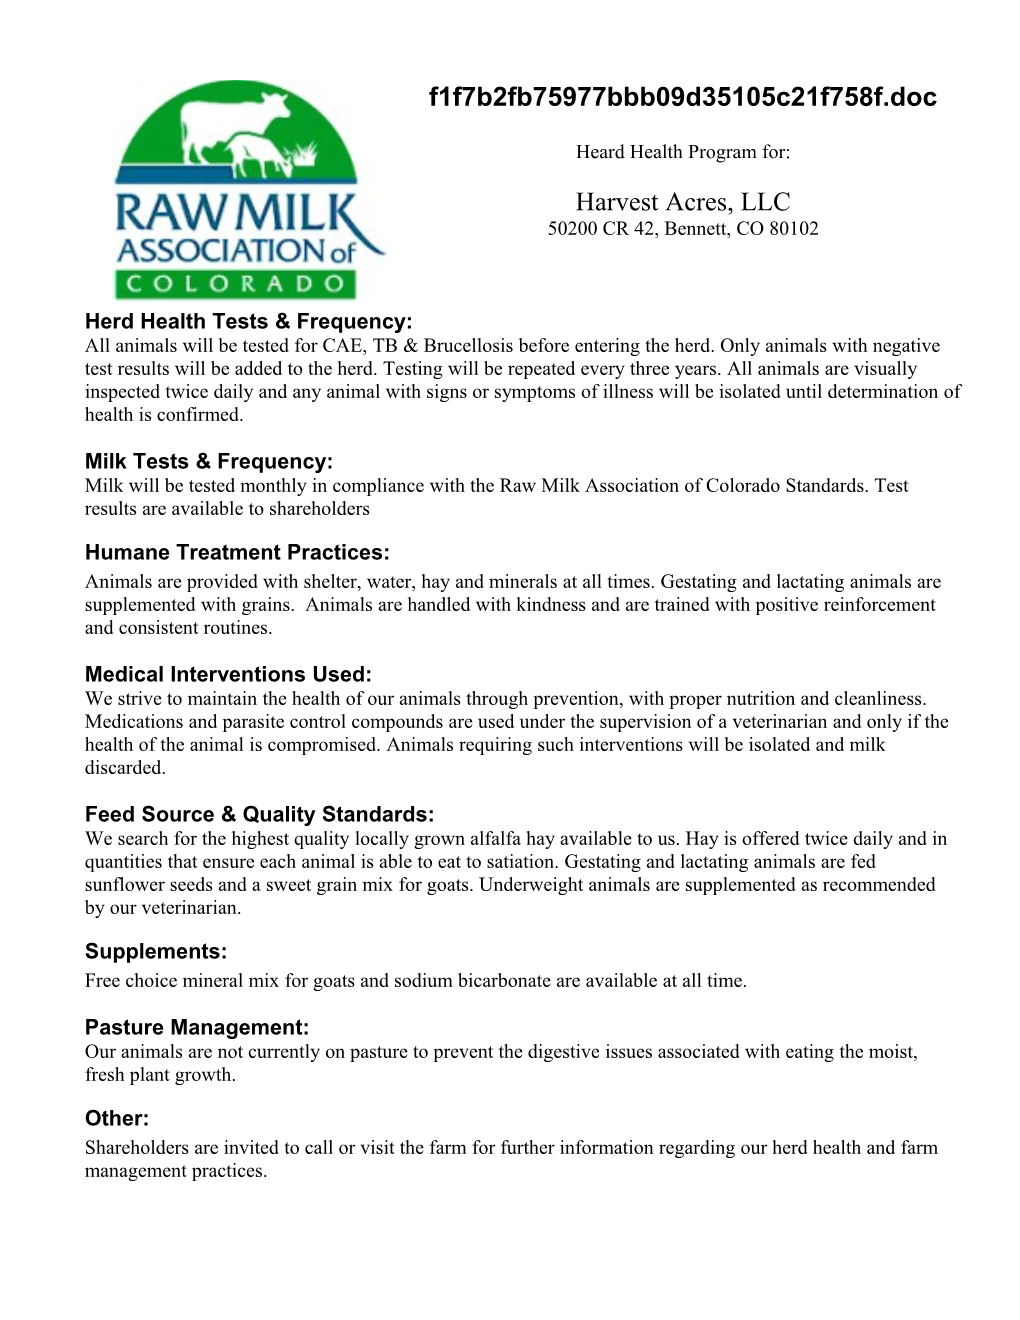 Raw Milk Association of Colorado